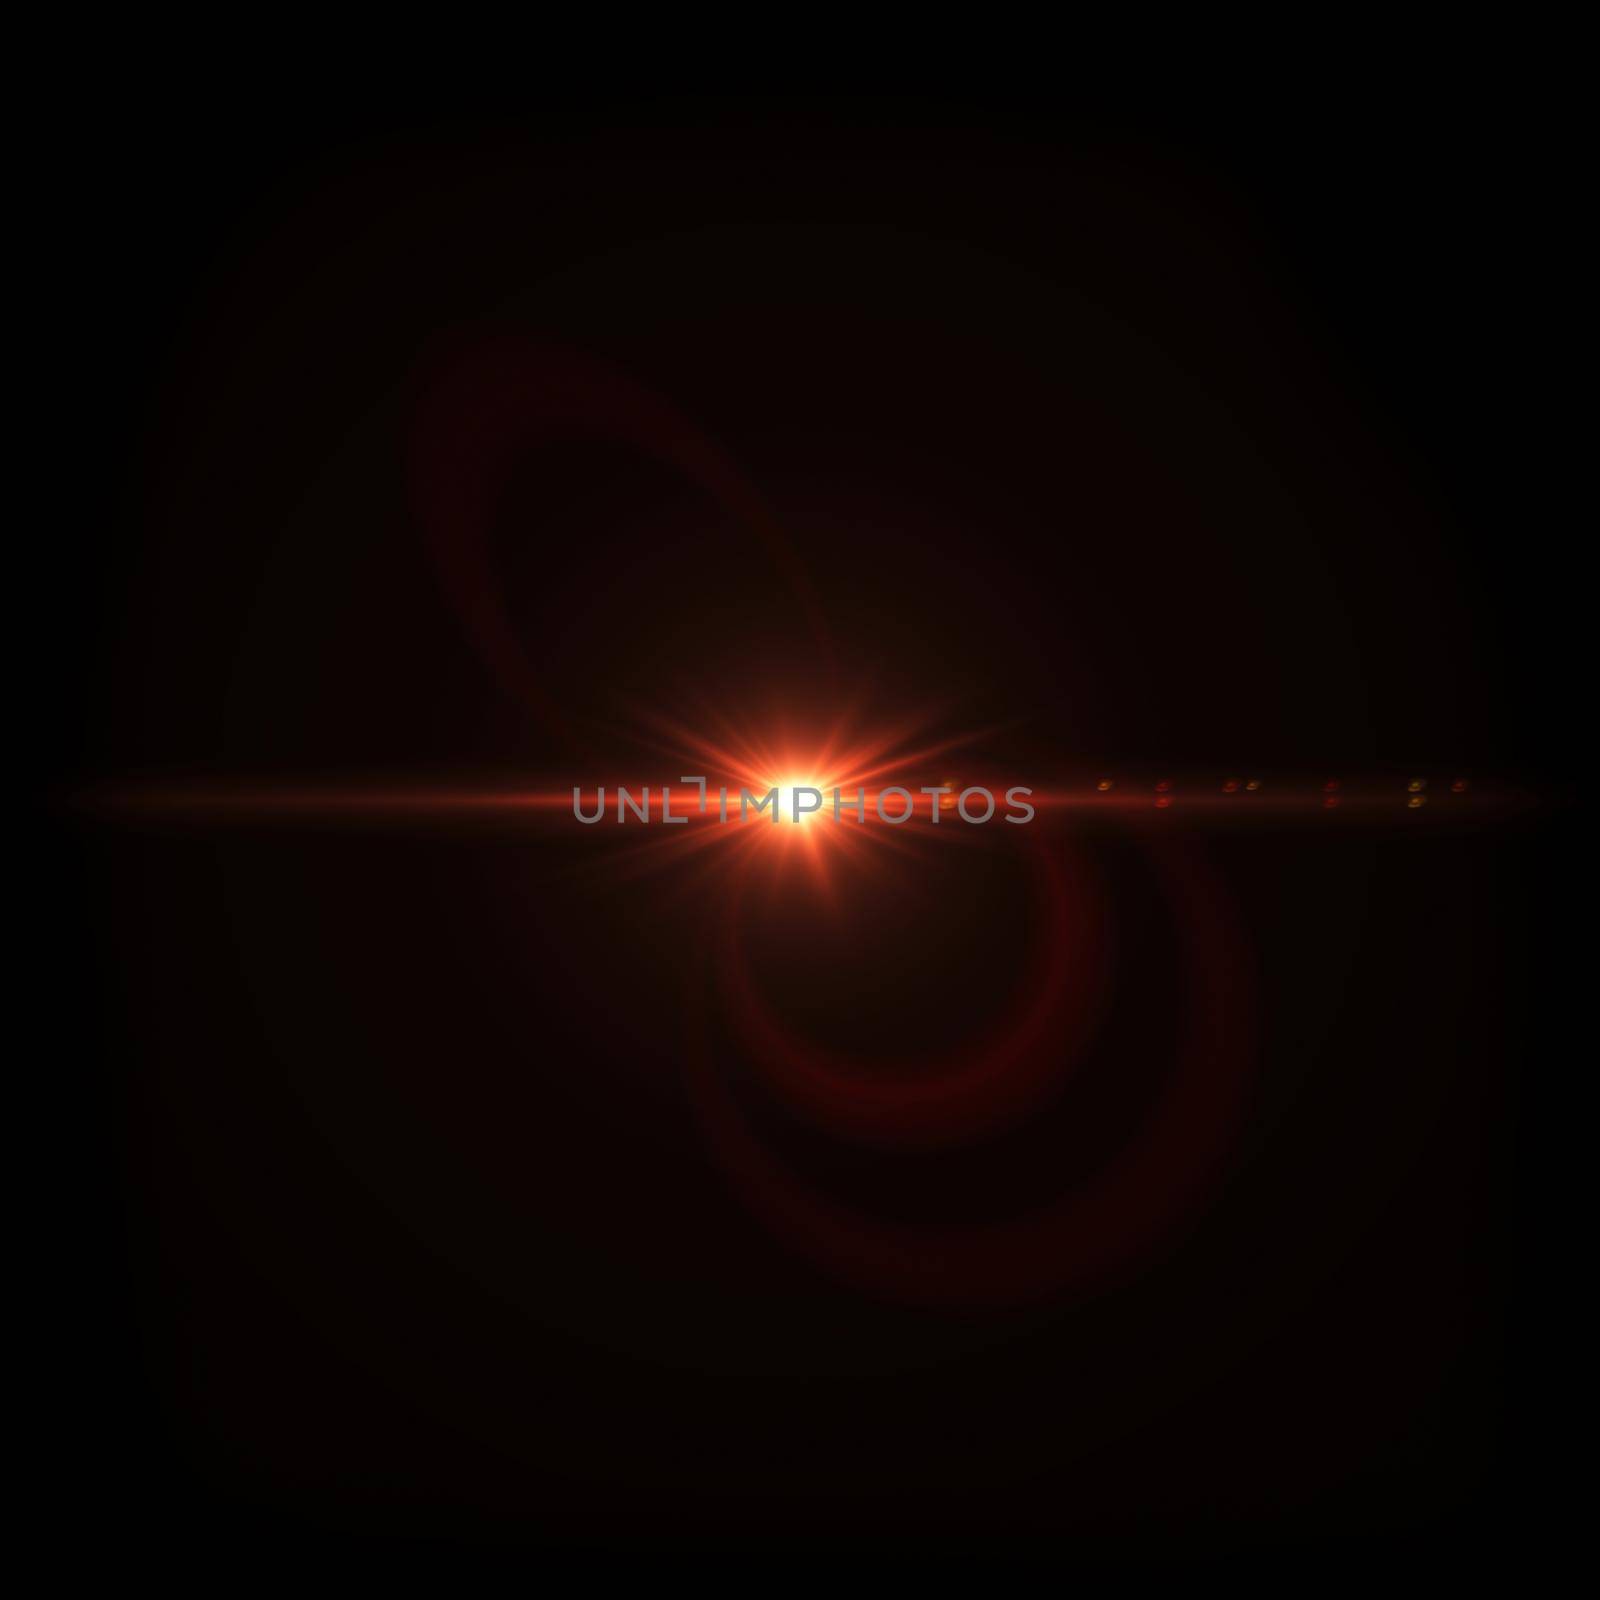 Red Light Lens flare on black background. by JpRamos